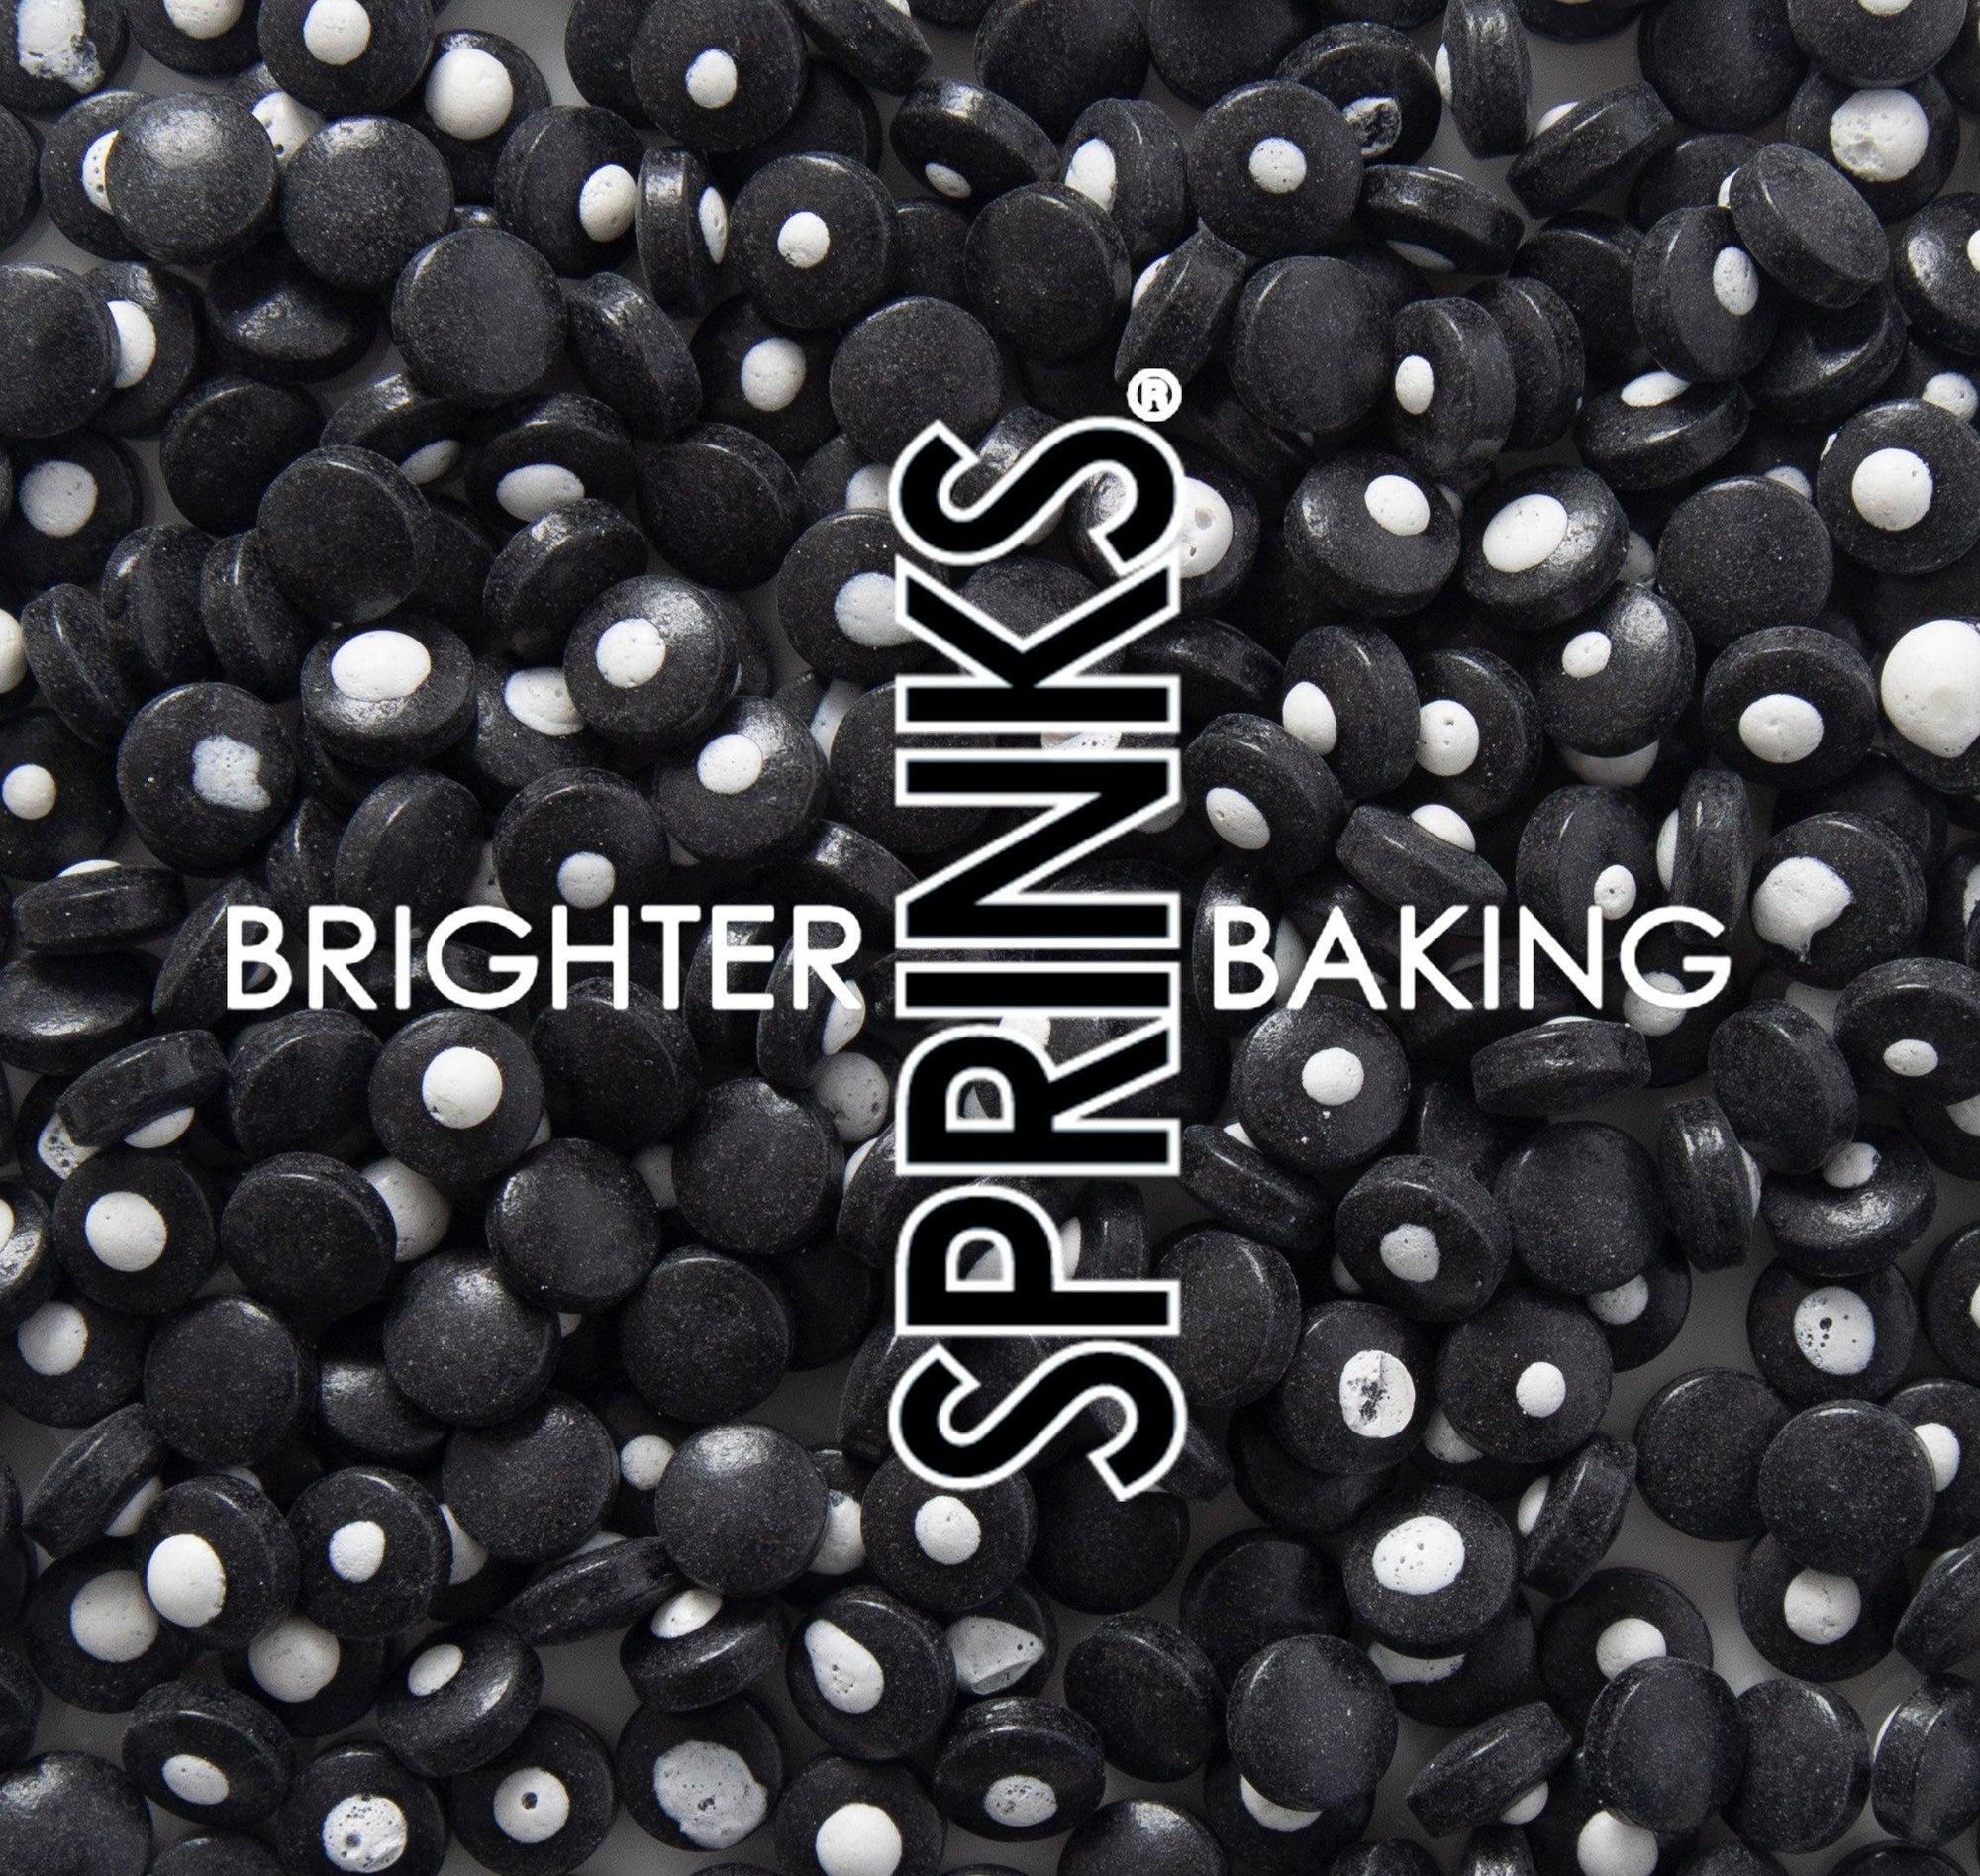 SPRINKS Sprinkle Mix MINI ANIME EYES 500g - Cake Decorating Central